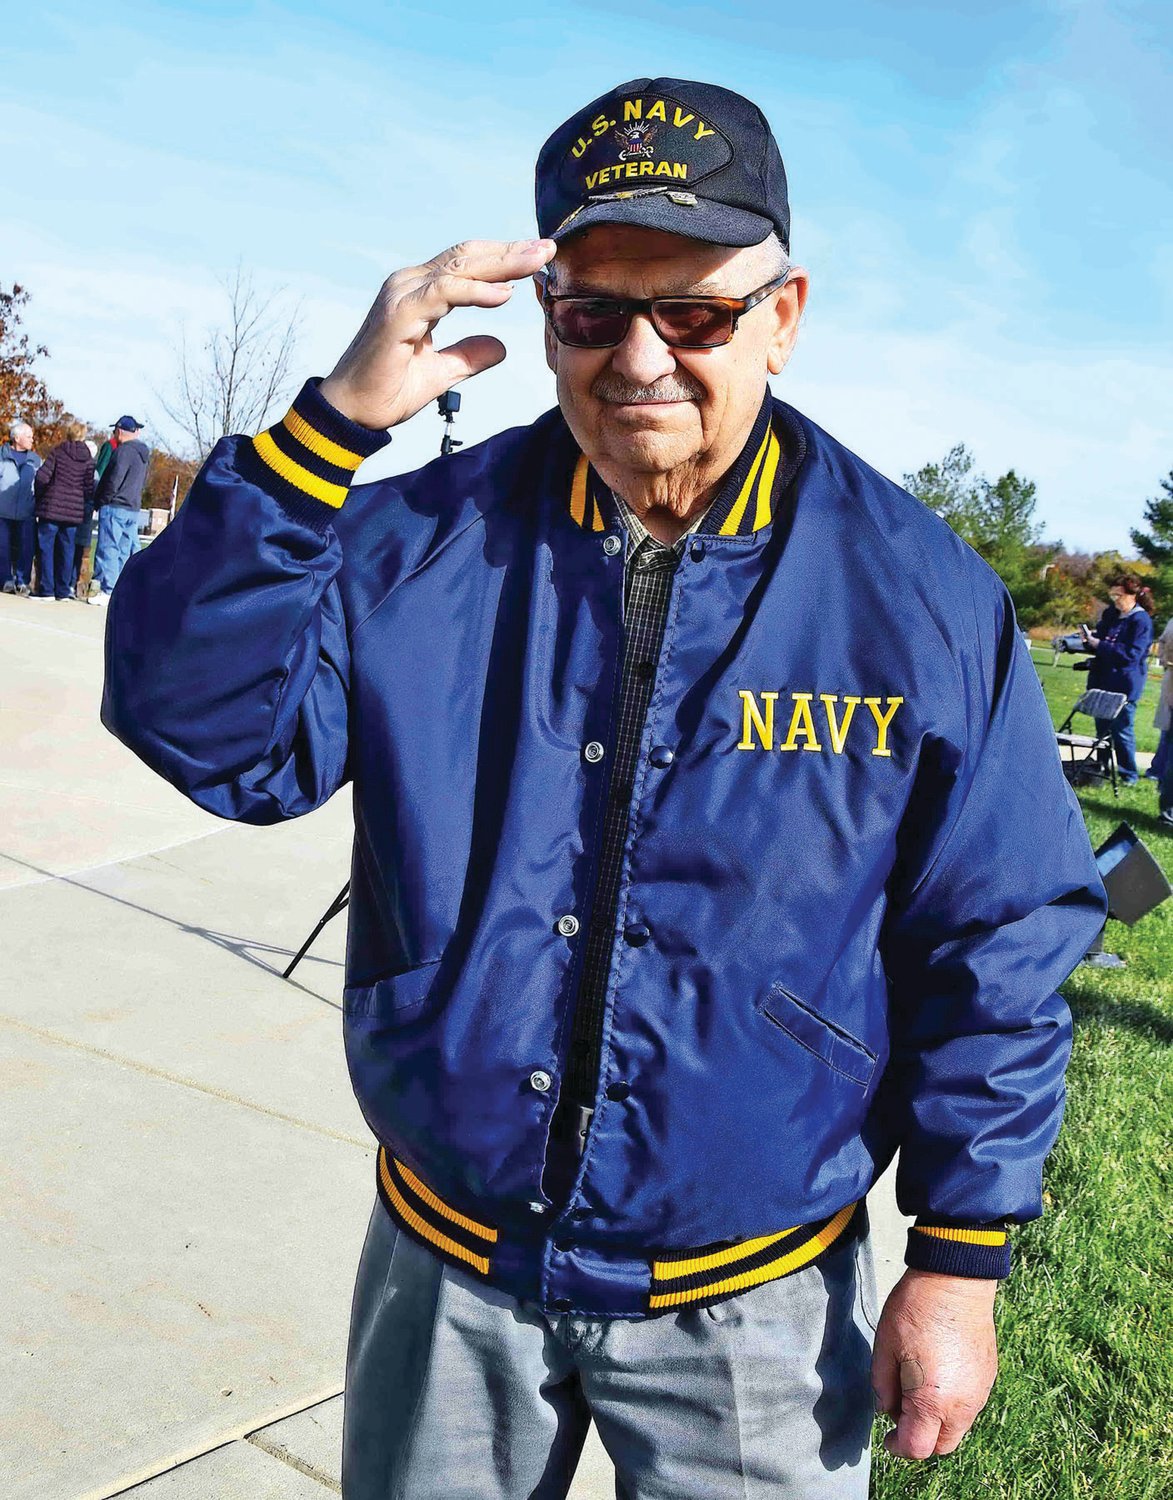 Navy veteran Gino Romamiello, one of many veterans present at the ceremony.